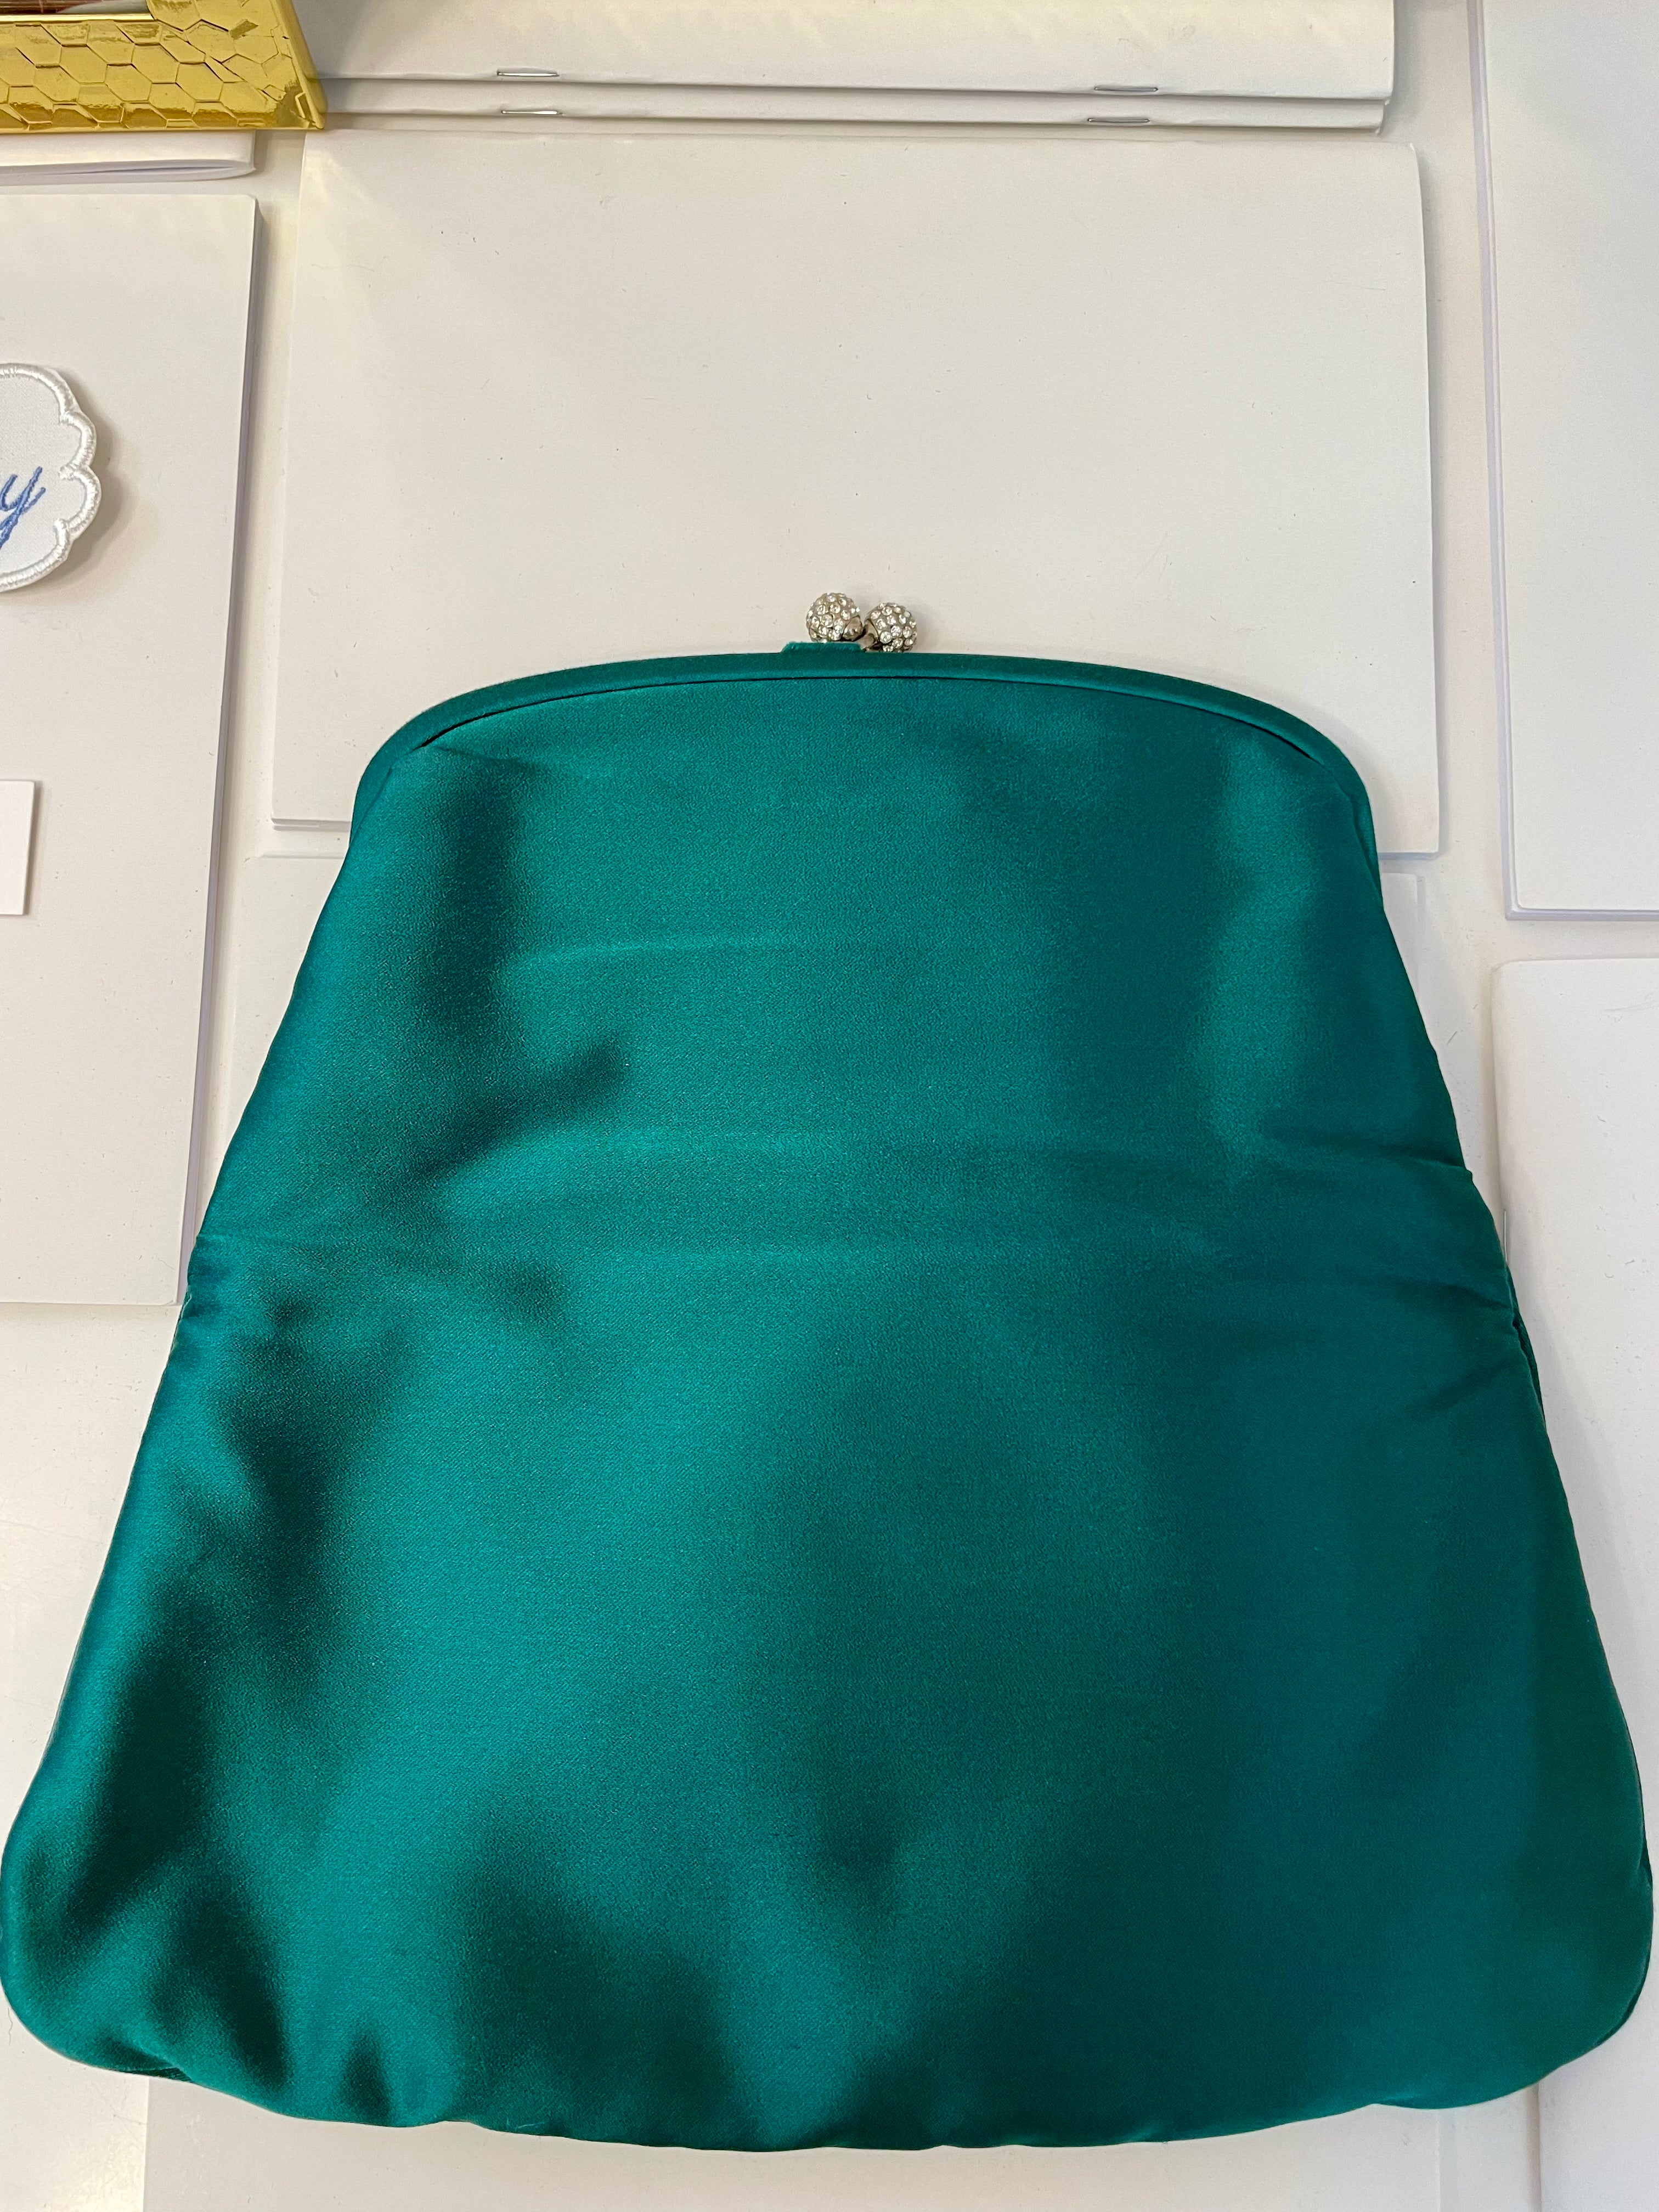 The most divine 1960's emerald green satin evening purse...... so classy!